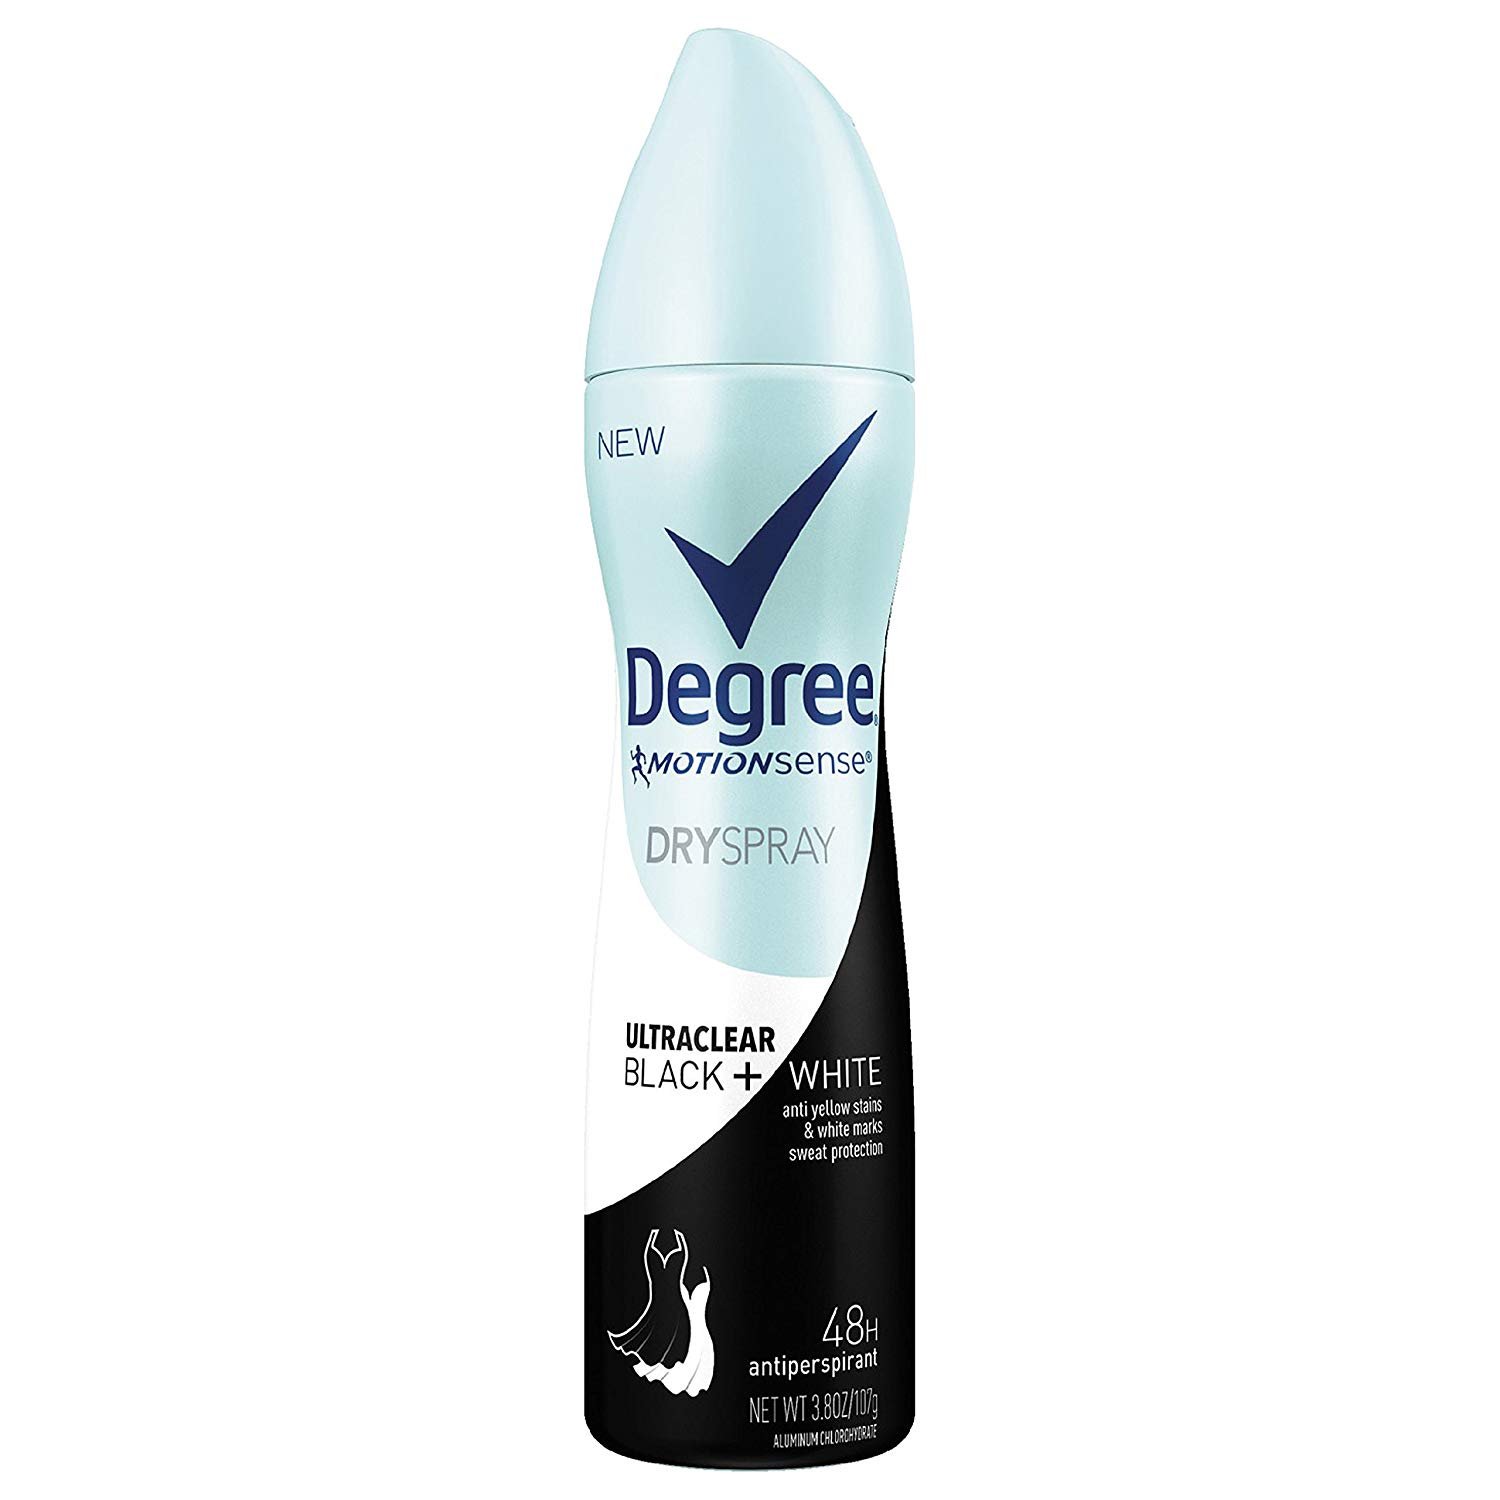 Degree UltraClear Antiperspirant Deodorant Dry Spray Black+White 3.8 oz - image 1 of 2